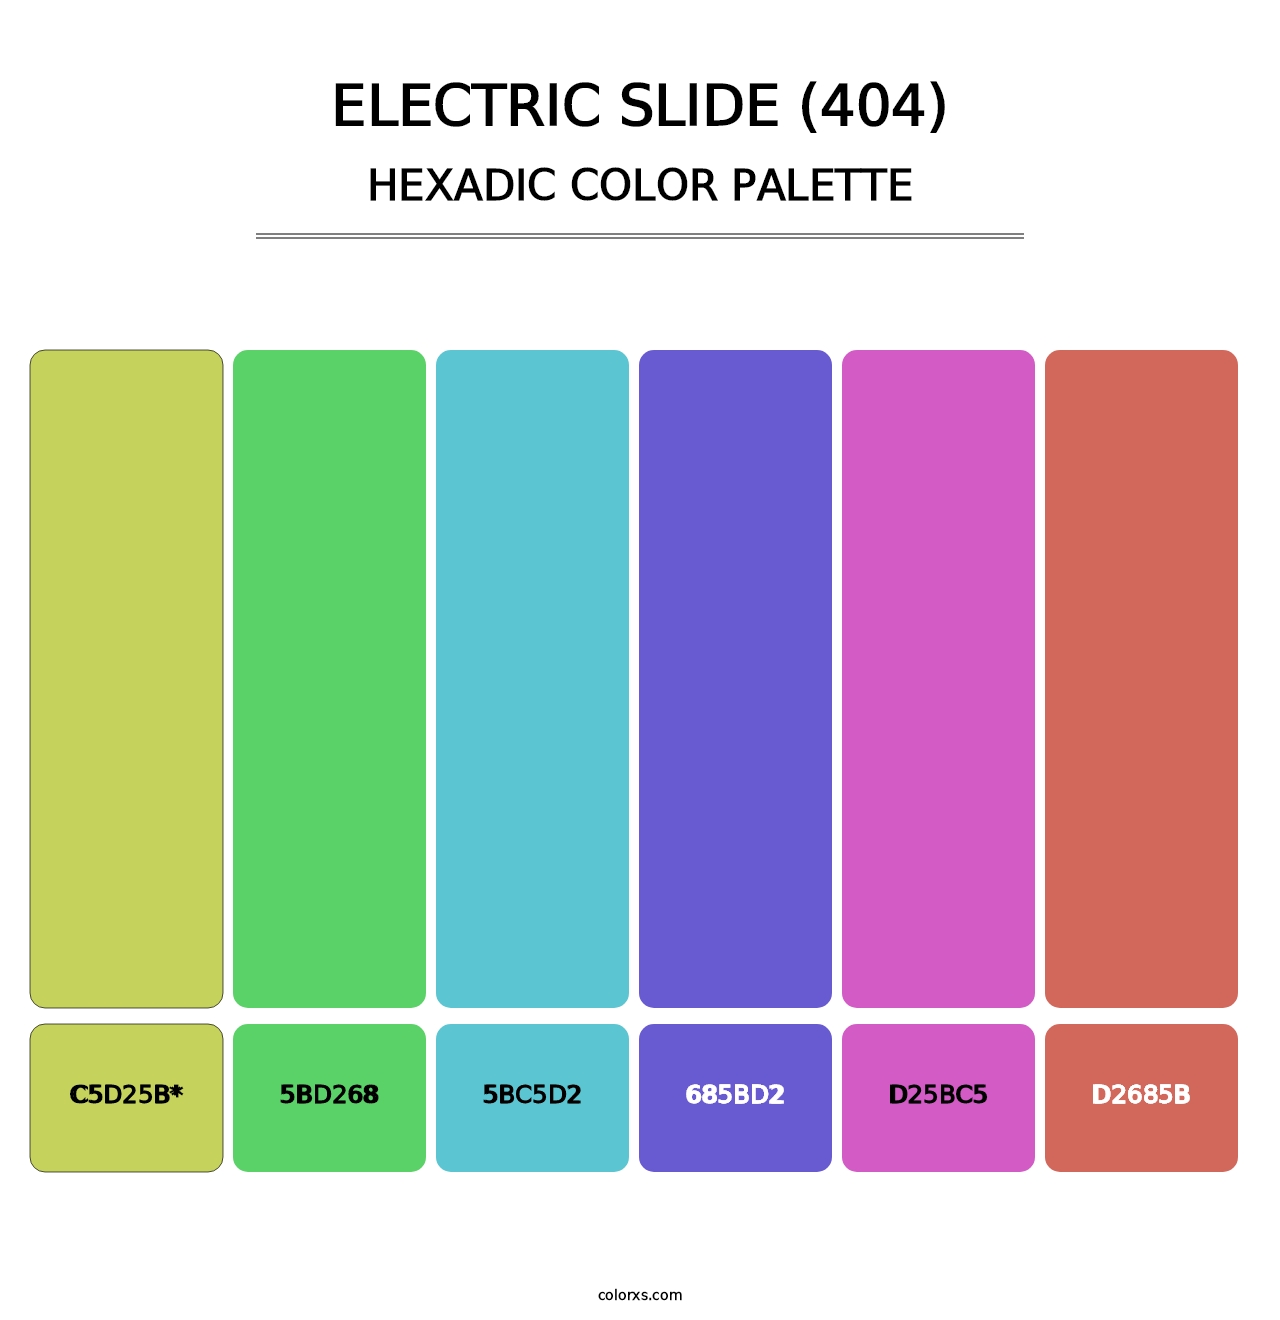 Electric Slide (404) - Hexadic Color Palette